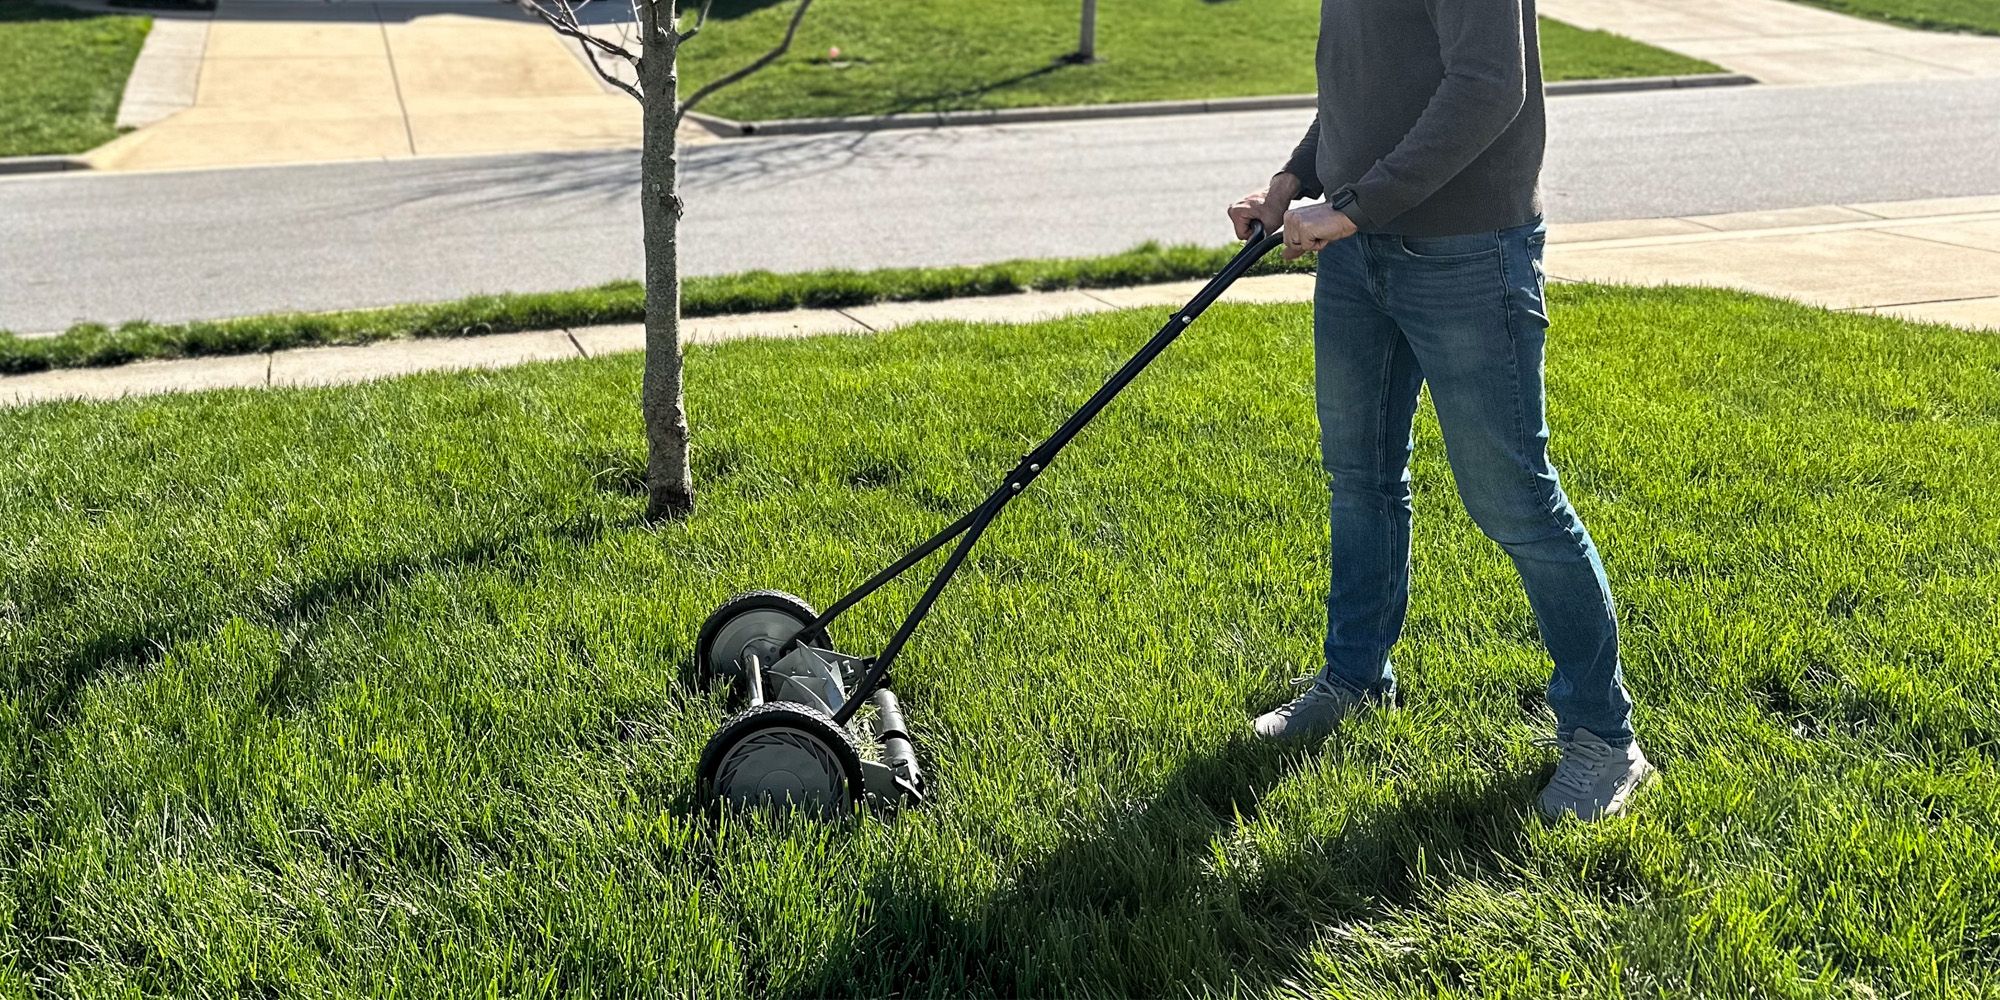 power reel lawn mower with grass catcher - Best Buy